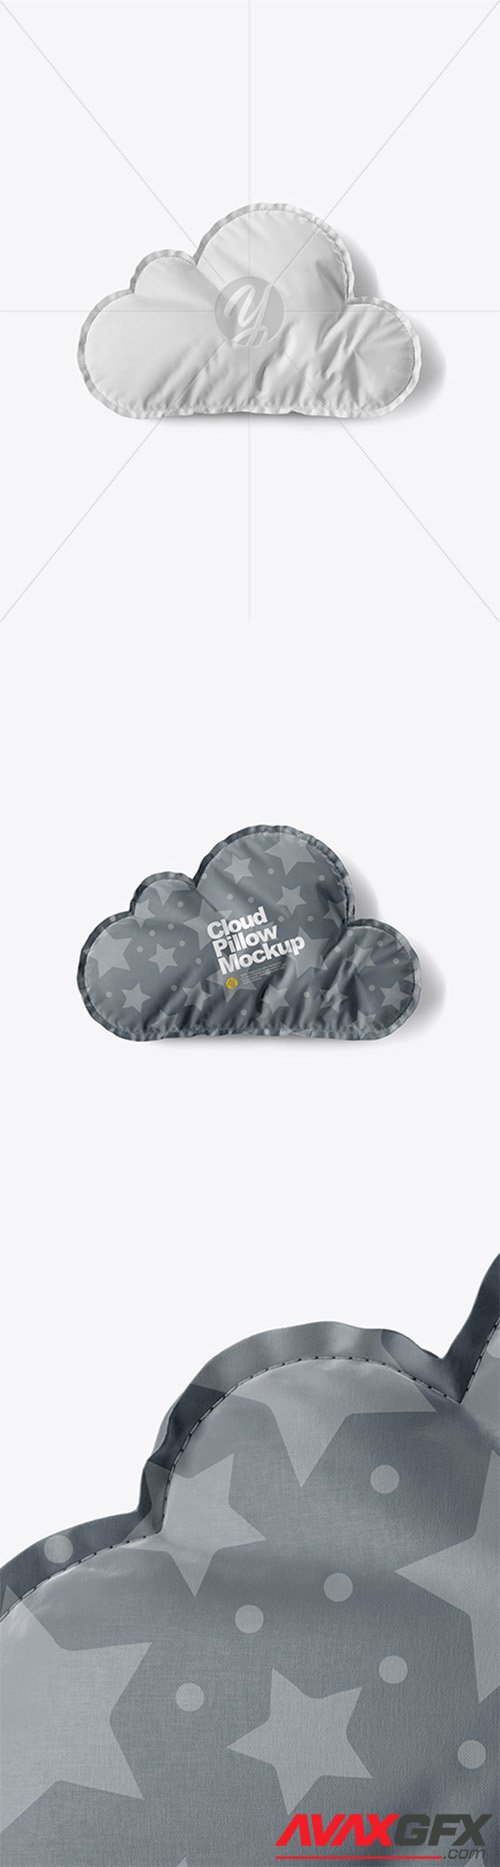 Cloud Pillow Mockup - Top View 30820